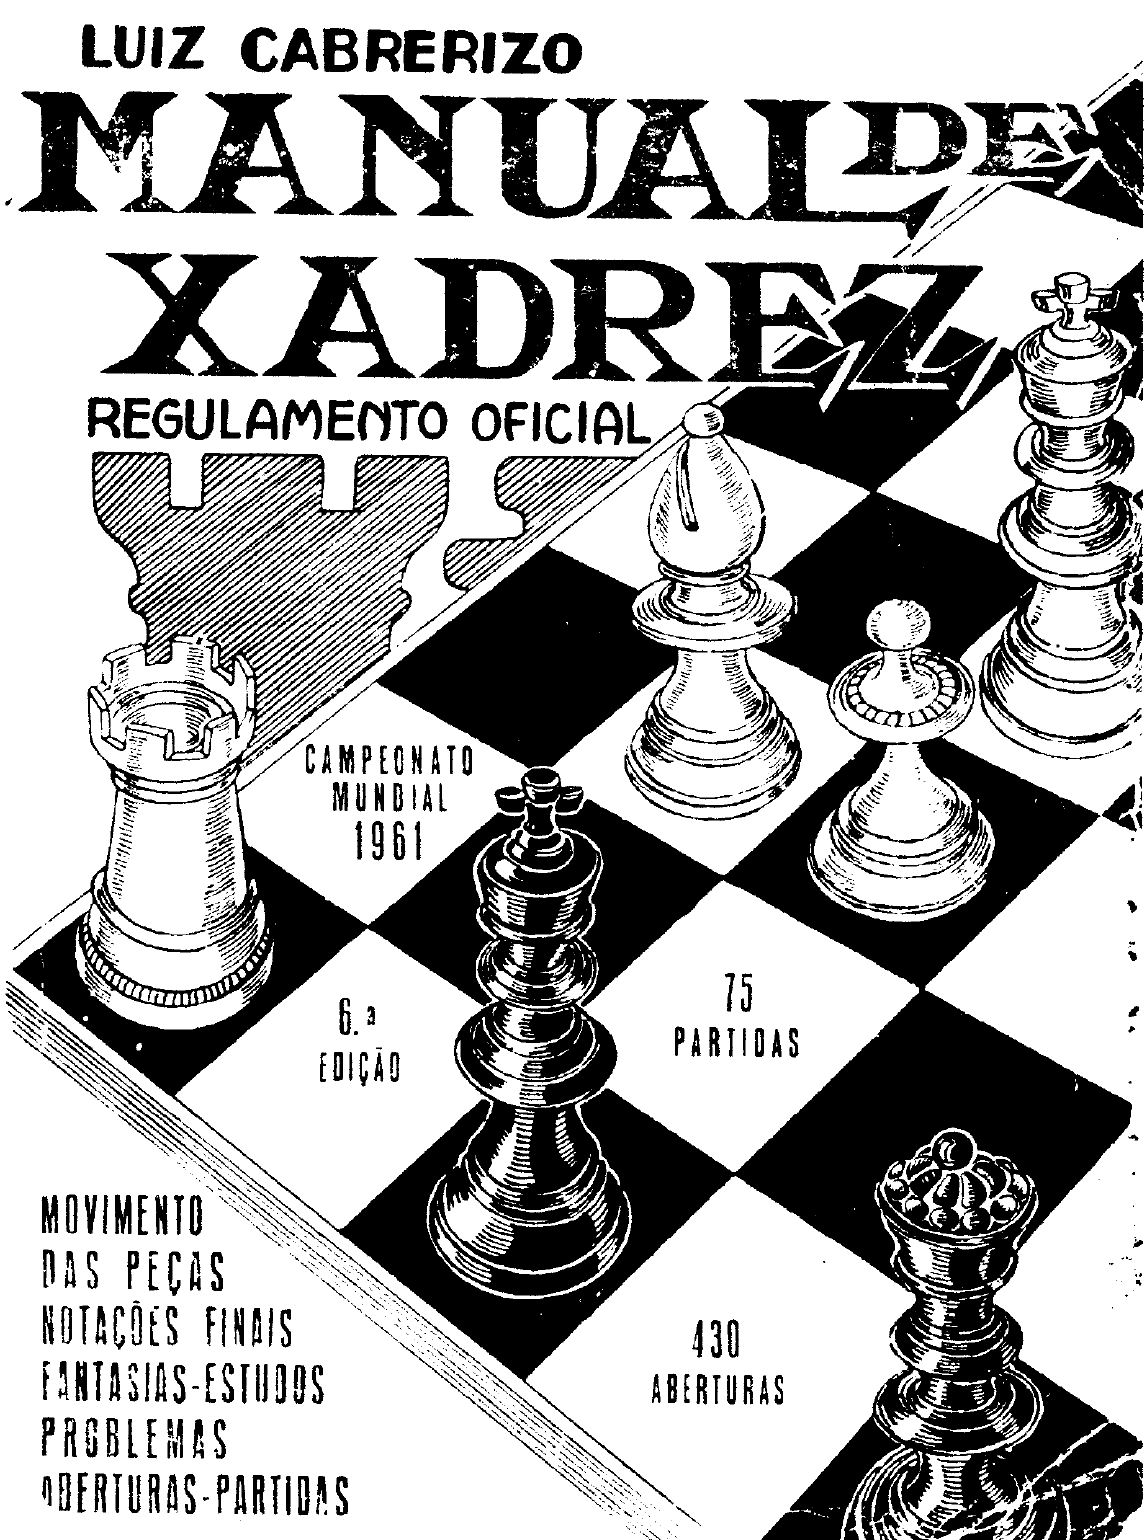 Manual Completo De Aberturas De Xadrez Em Pdf De Fred Reinfe